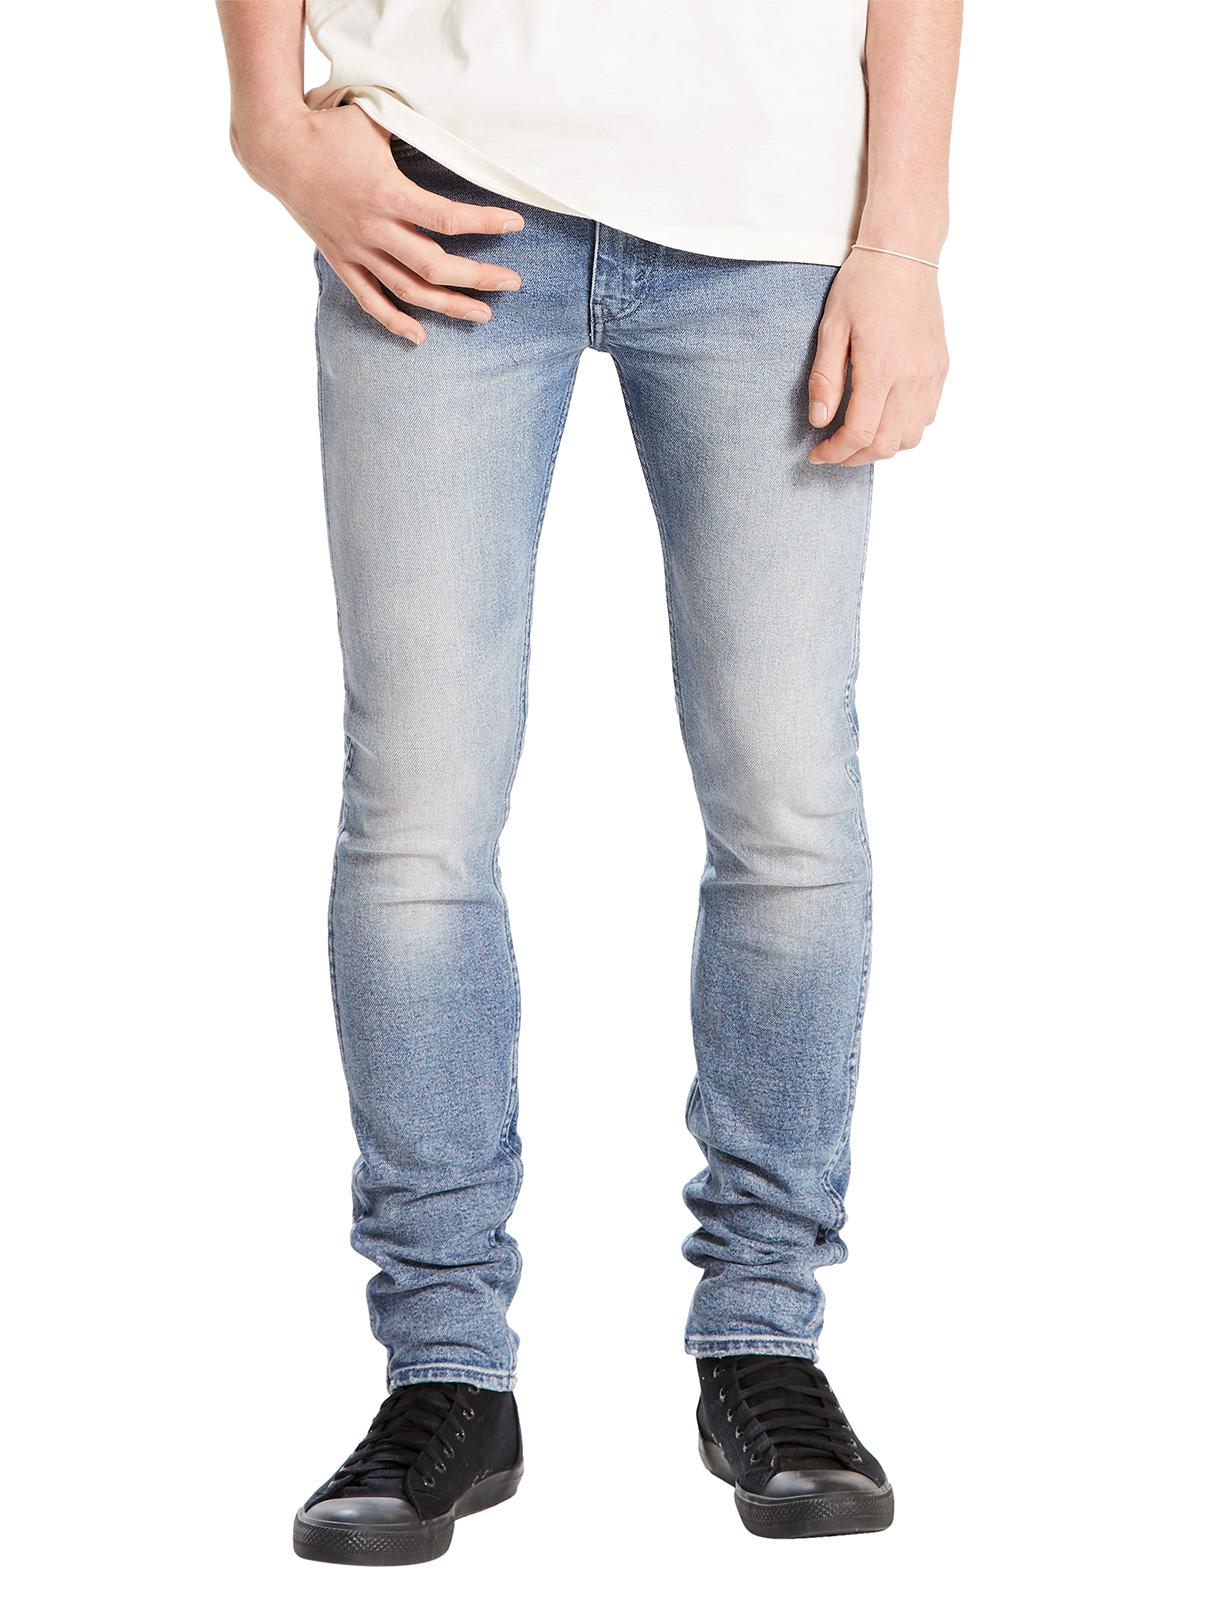 Levi's Denim Hearns Line 8 Skinny Jeans in Blue for Men - Lyst